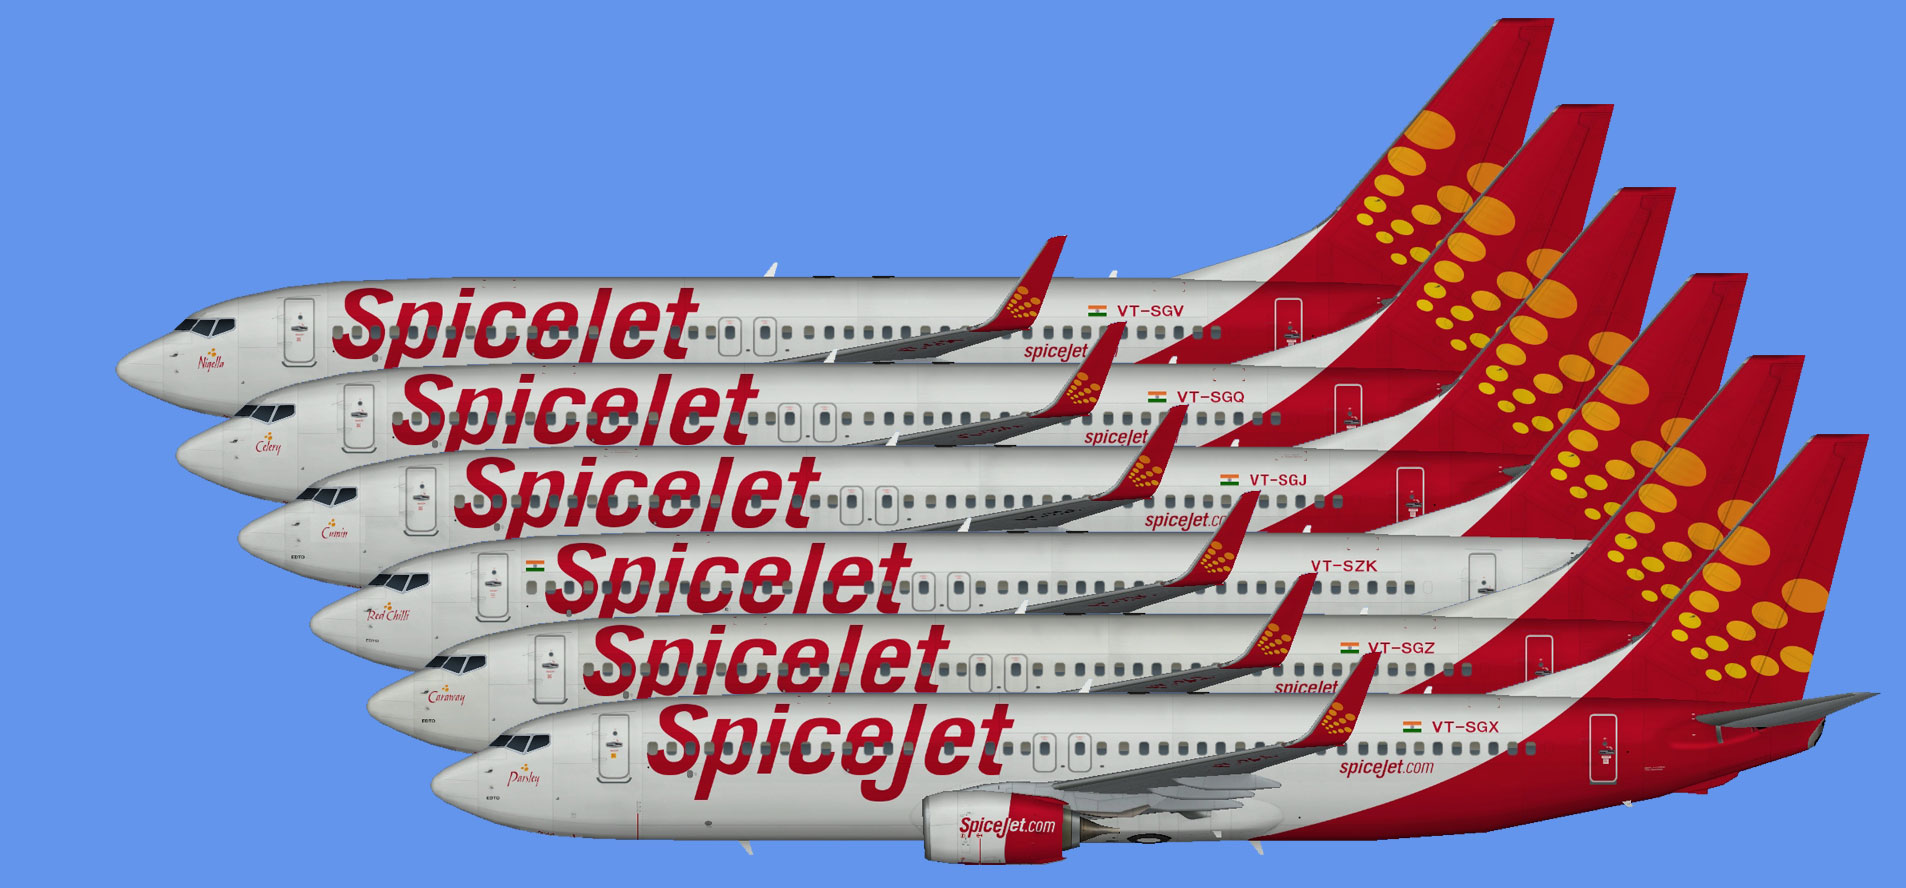 Spicejet 737-800 fleet -part2